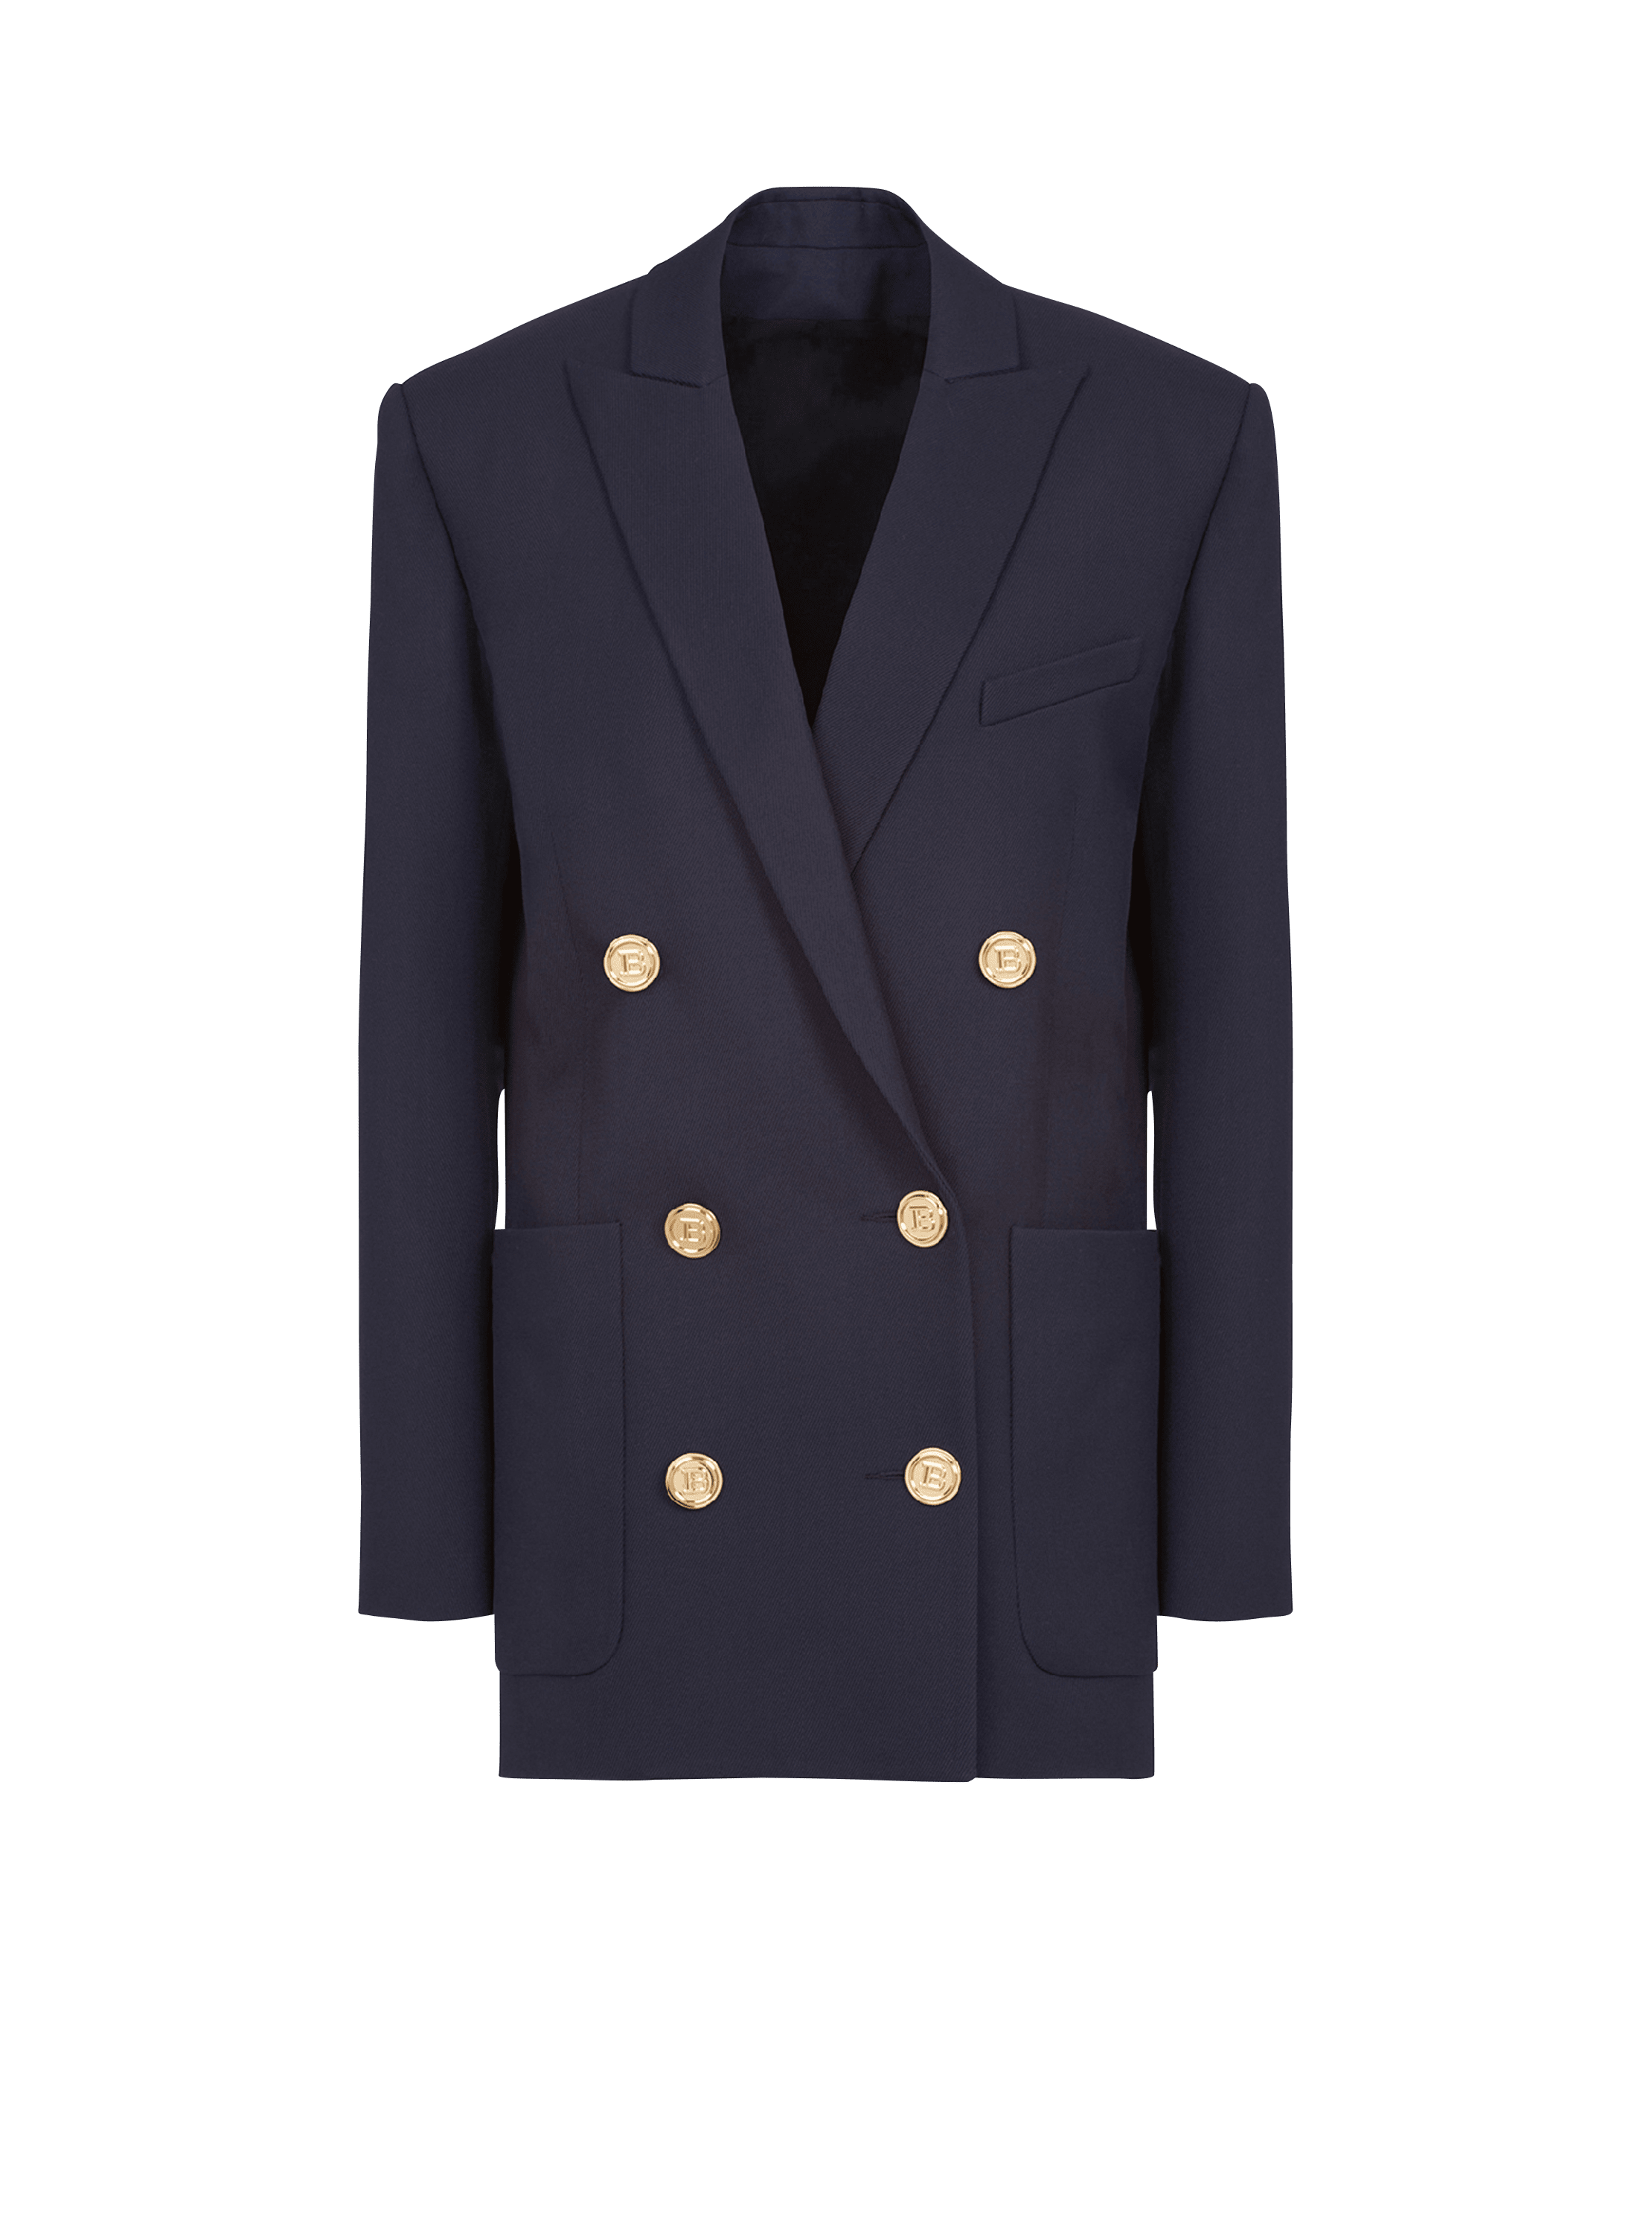 Wool double-breasted boyfriend jacket, navy, hi-res